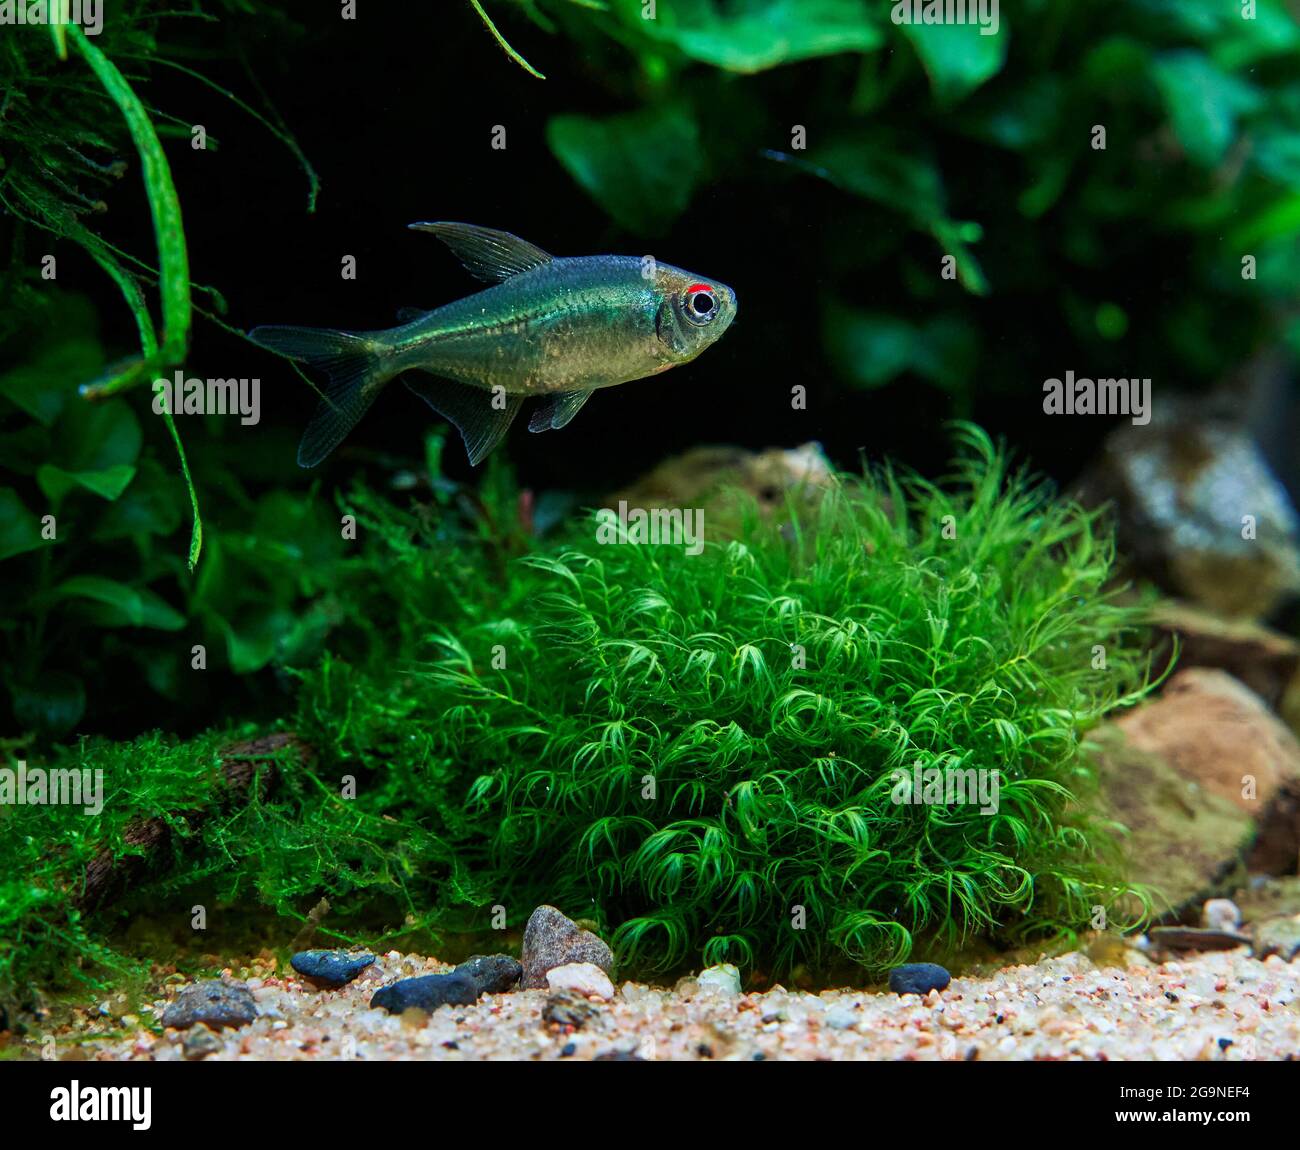 Diamond tetra fish swimming in the aquarium with phoenix moss. Stock Photo